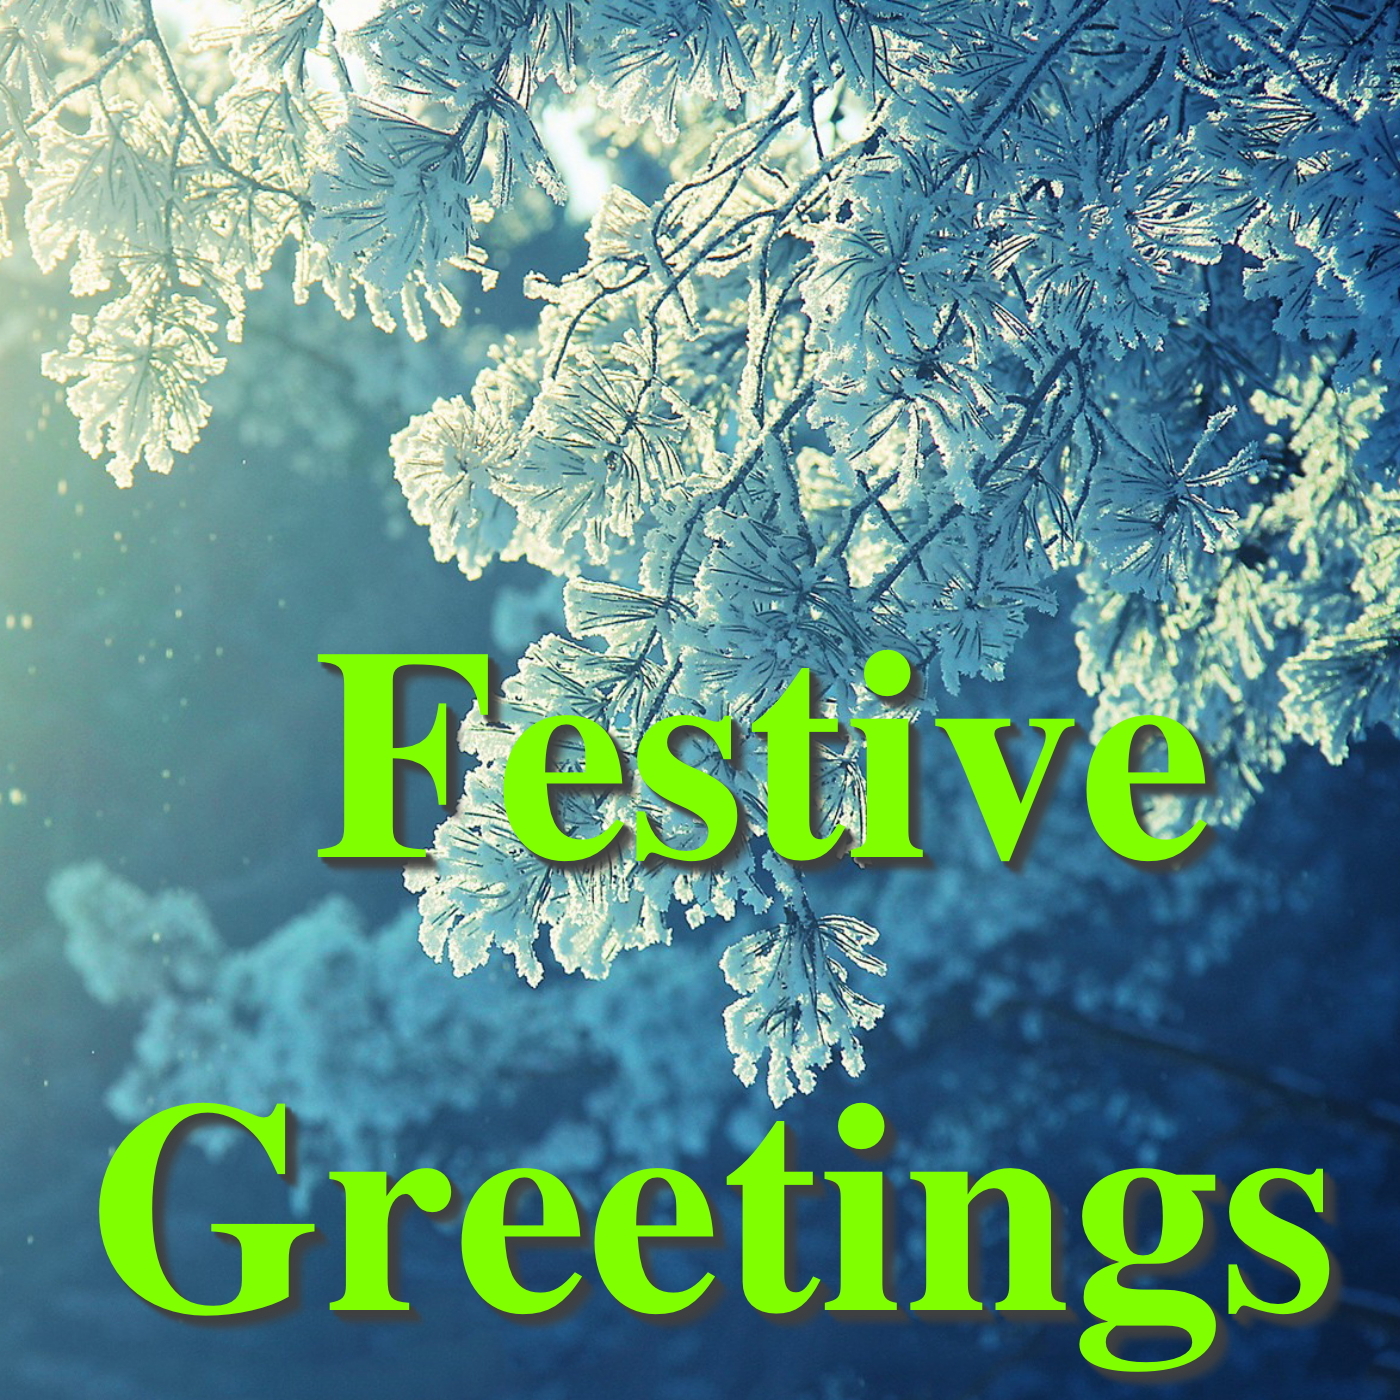 Festive Greetings